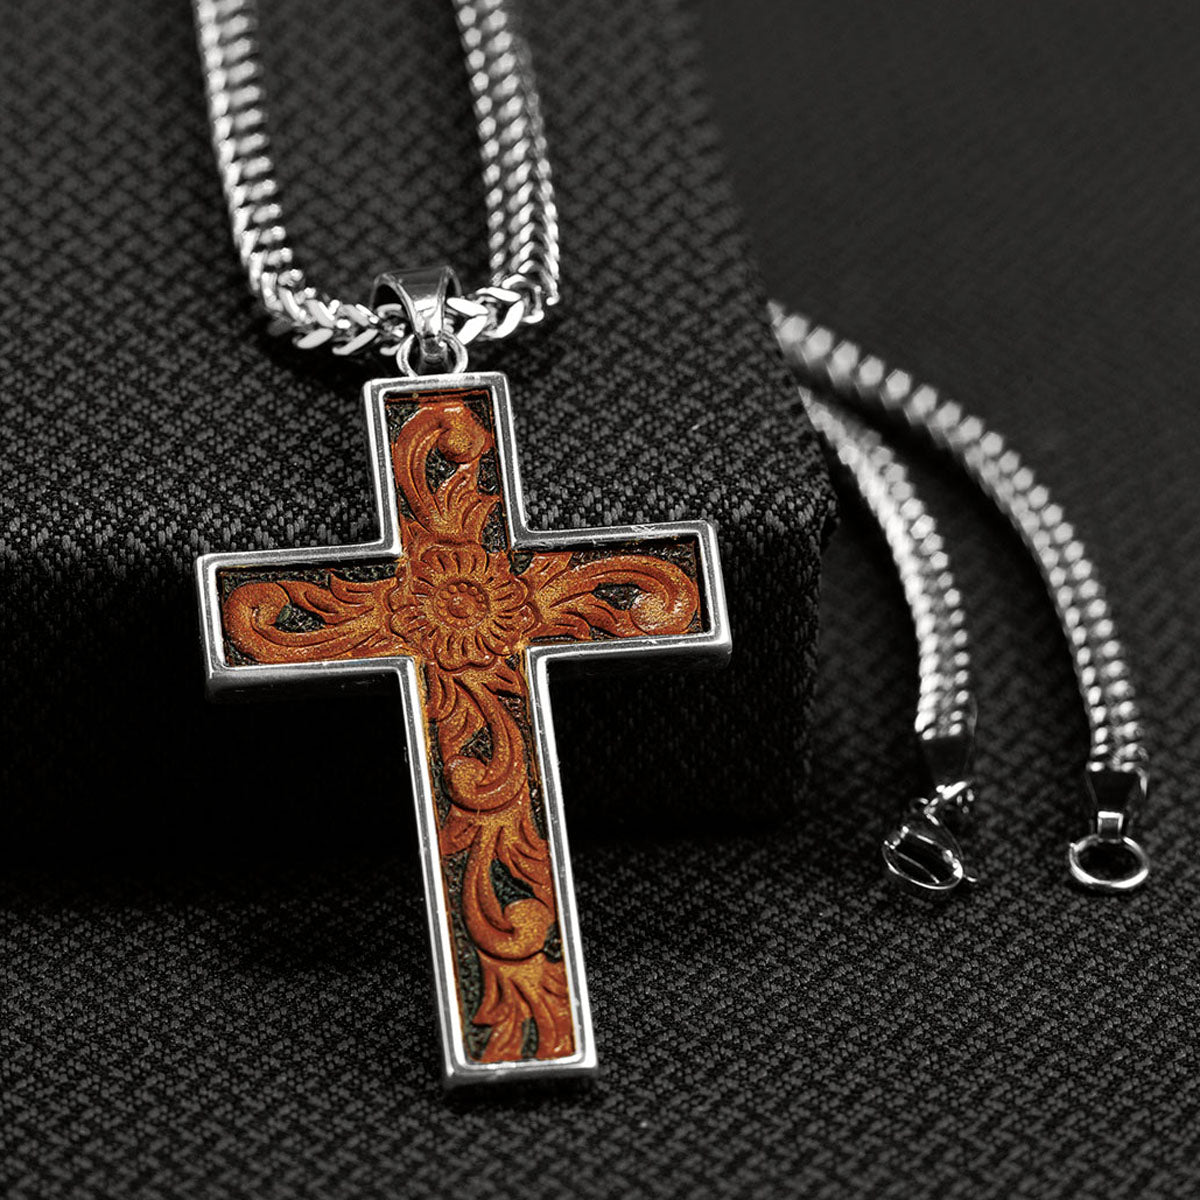 Twister Men's Necklace - Leather Scroll Cross